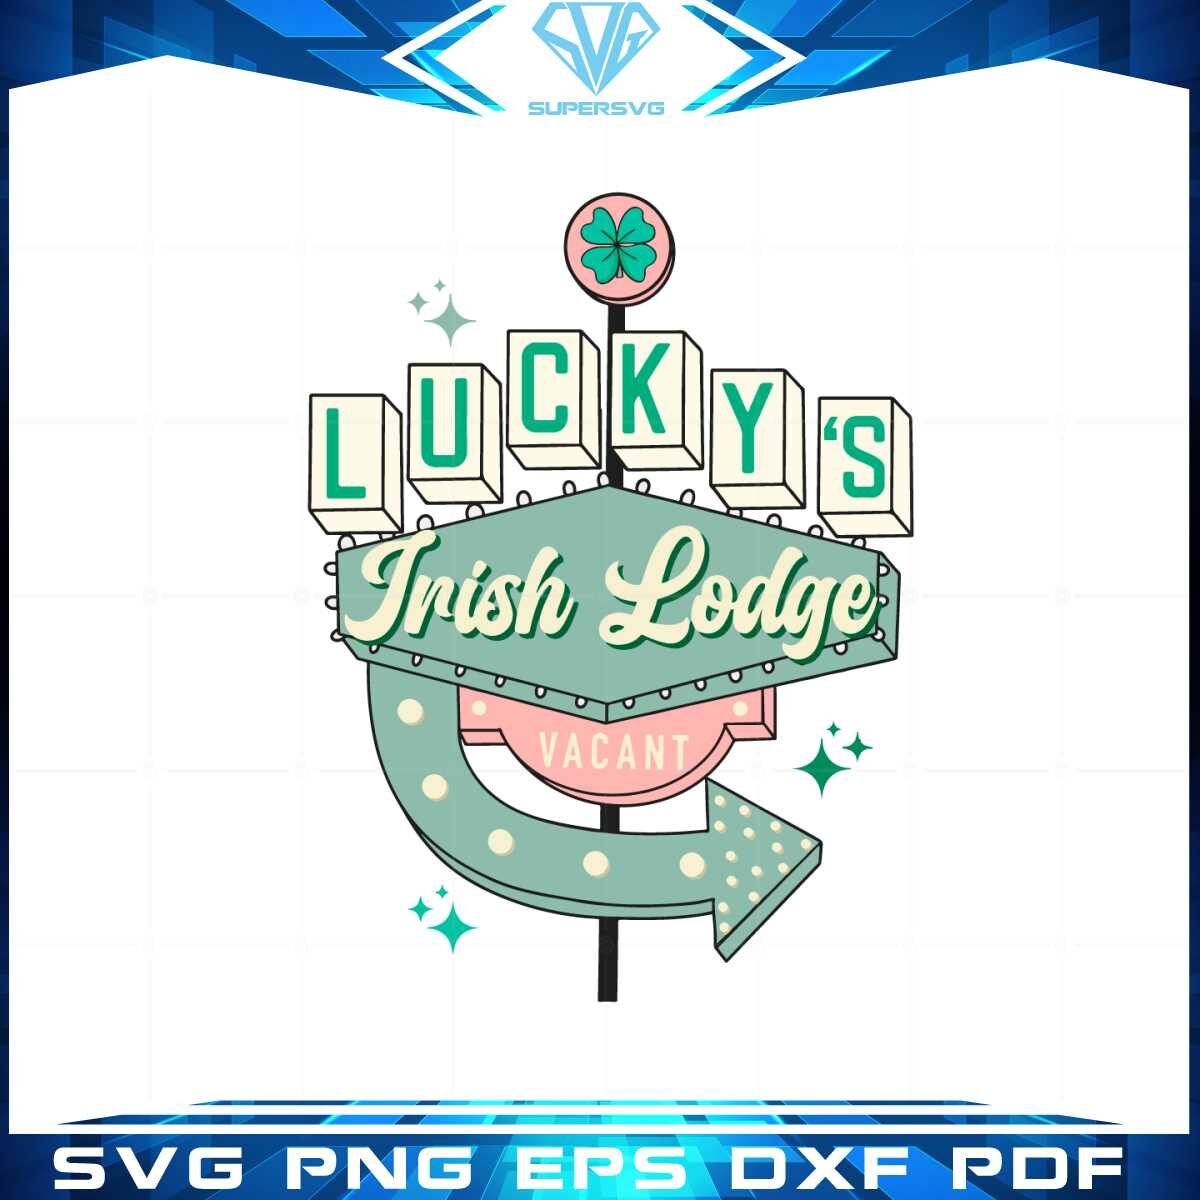 luckys-irish-lodge-svg-best-graphic-designs-cutting-files